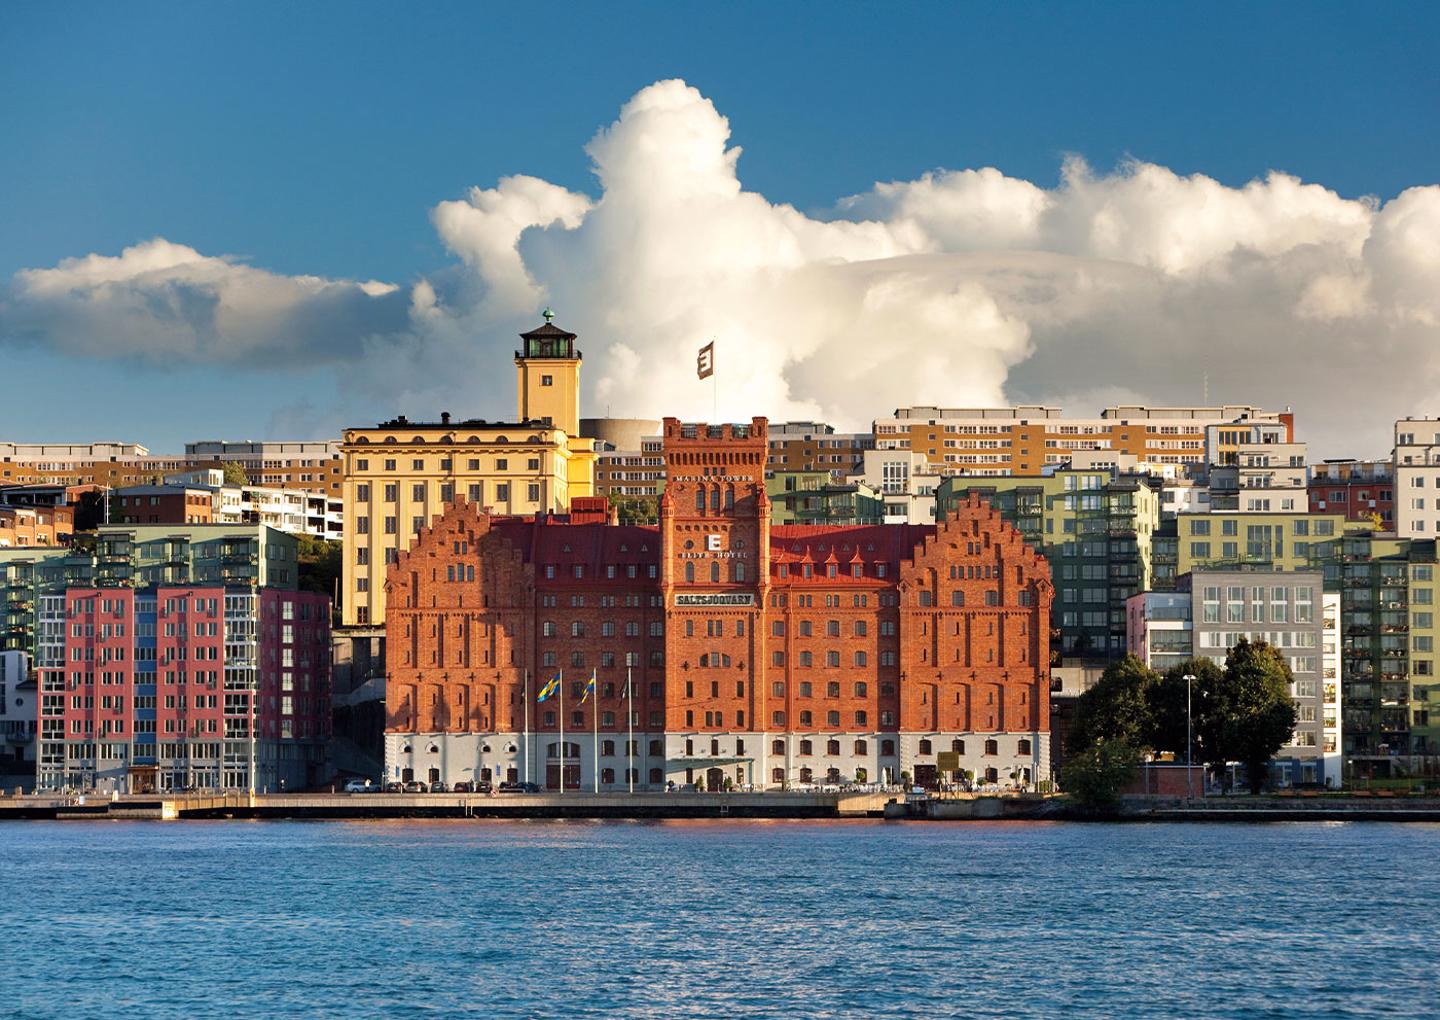 stockholm elite hotel marina tower